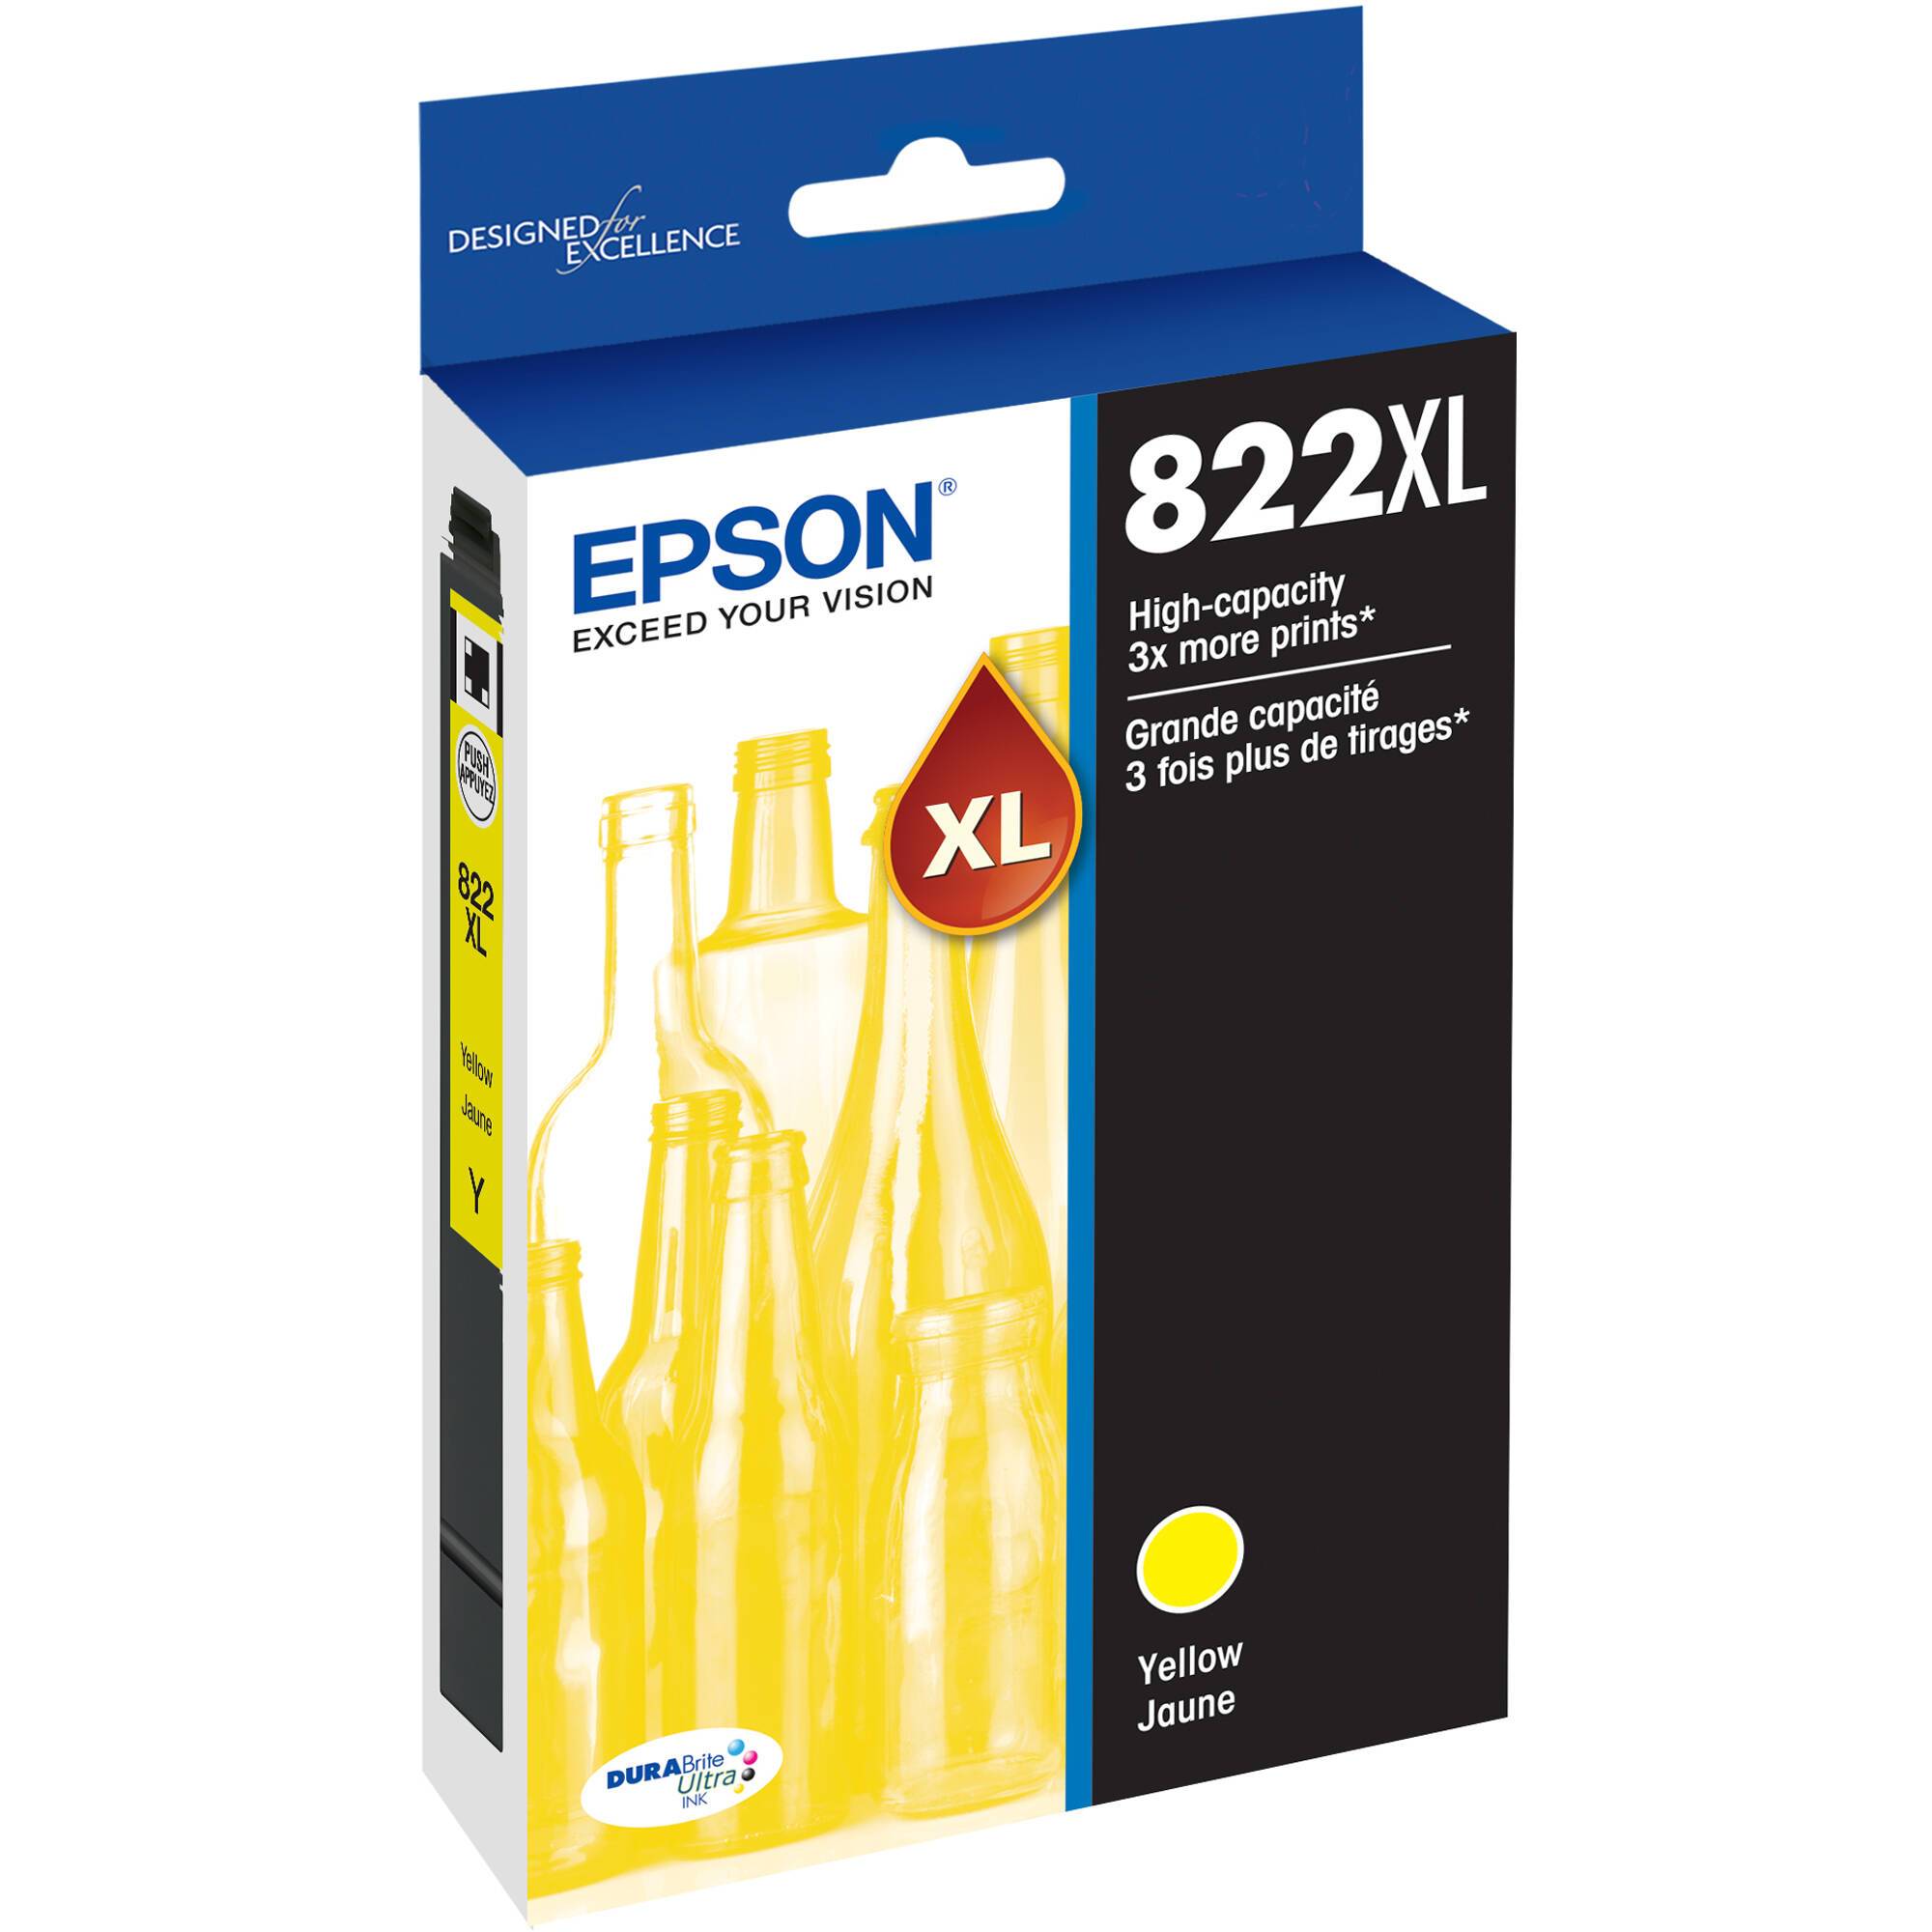 Absolute Toner Original OEM Genuine T822XL420-S EPSON T822 High Capacity Yellow Ink Cartridge Original Epson Cartridge